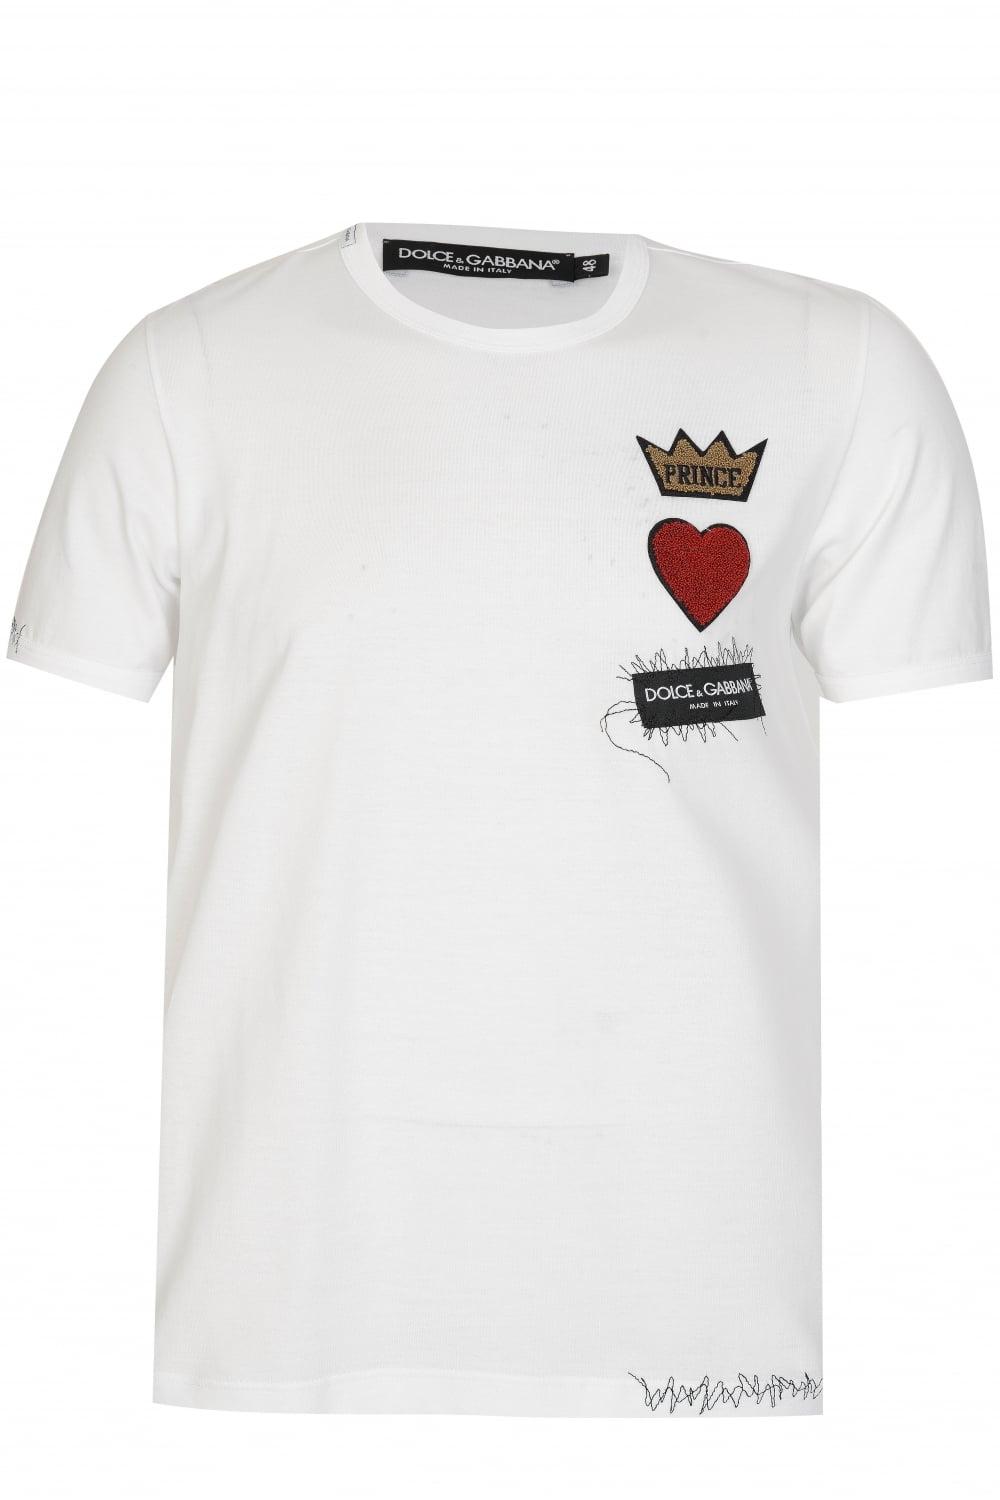 Flock Logo - Dolce & Gabbana Flock Logo Tshirt White